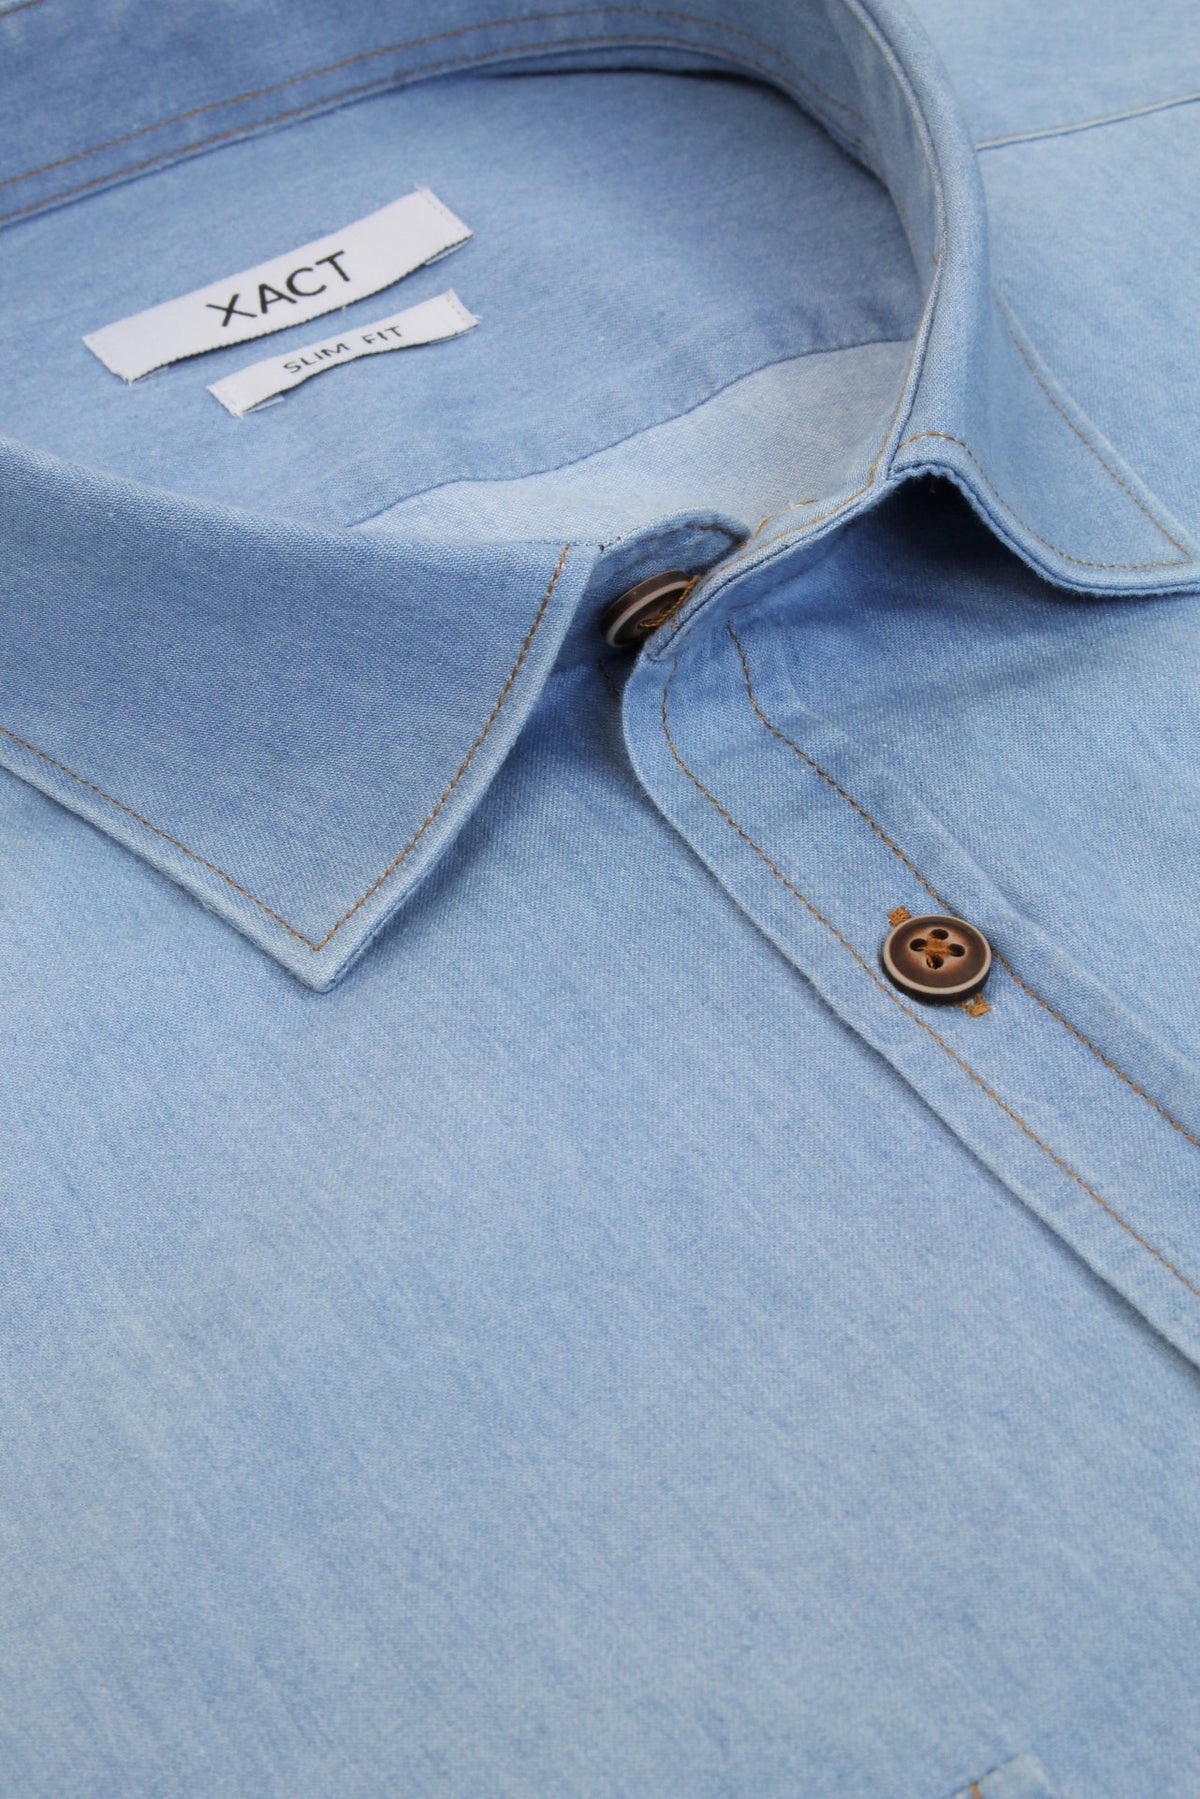 Xact Mens Long Sleeved Denim Shirt - Slim Fit, 04, Xsh1074, Blue